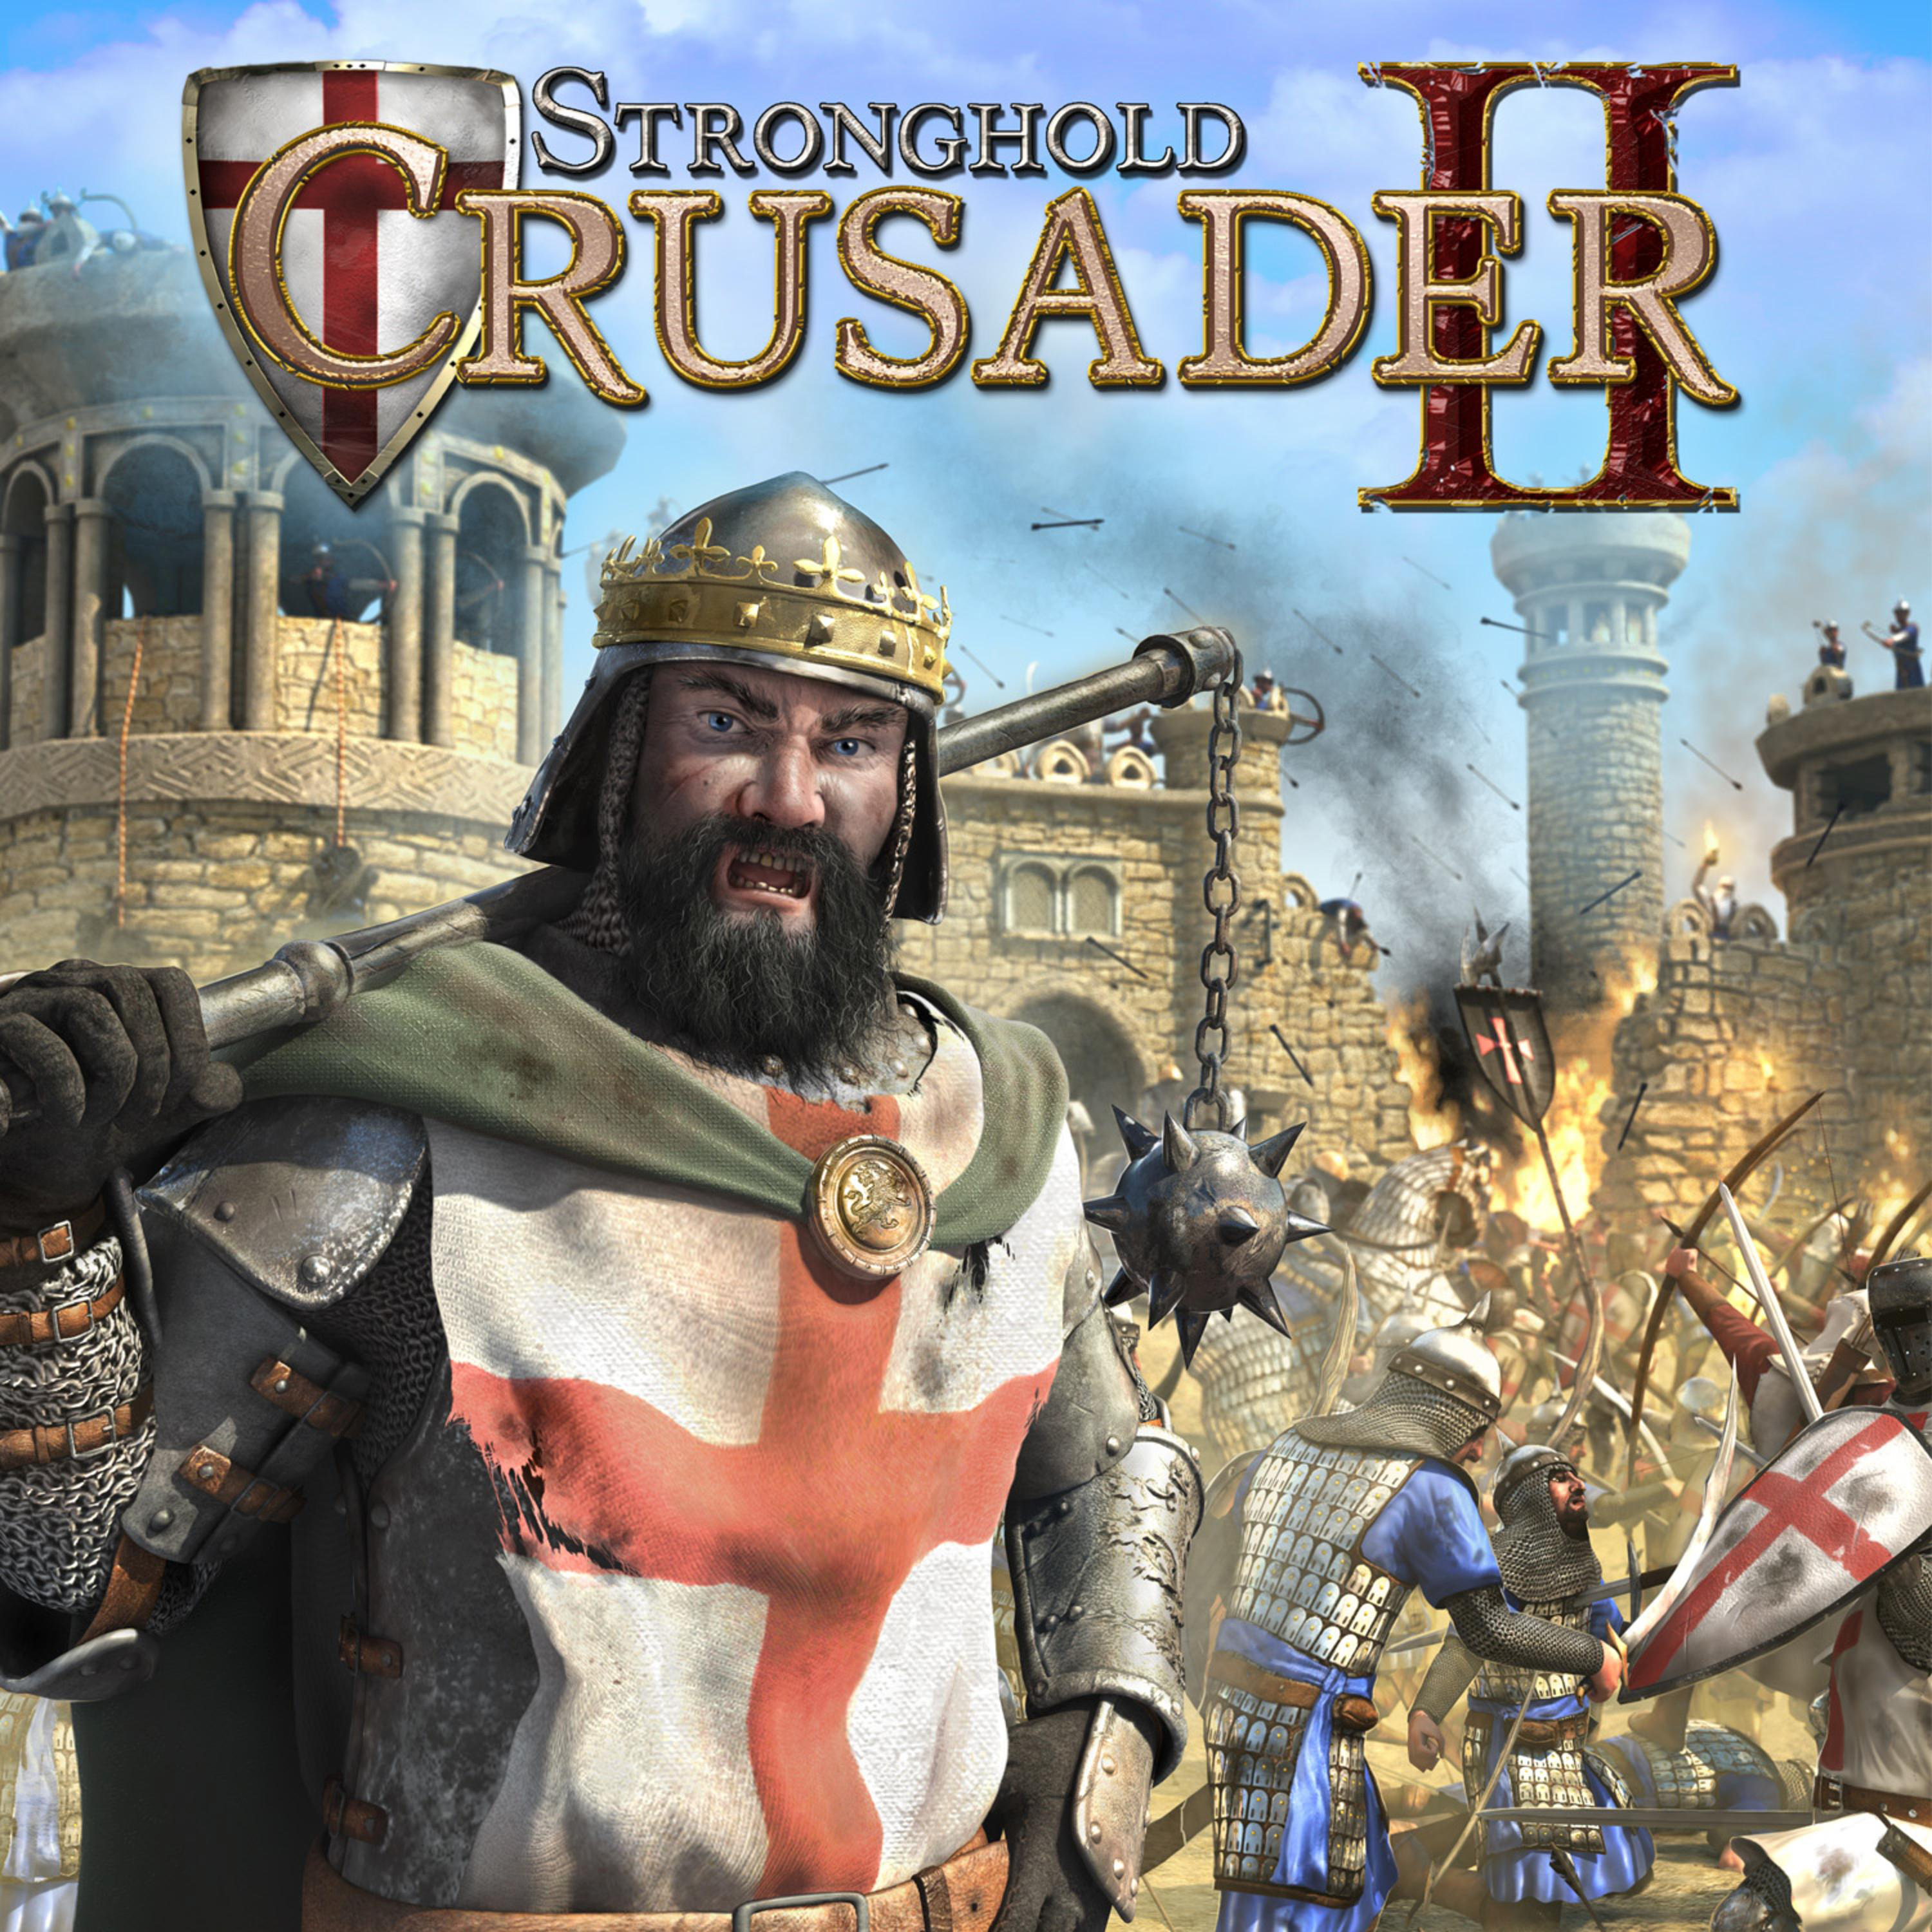 Stronghold crusader hd стим фото 84